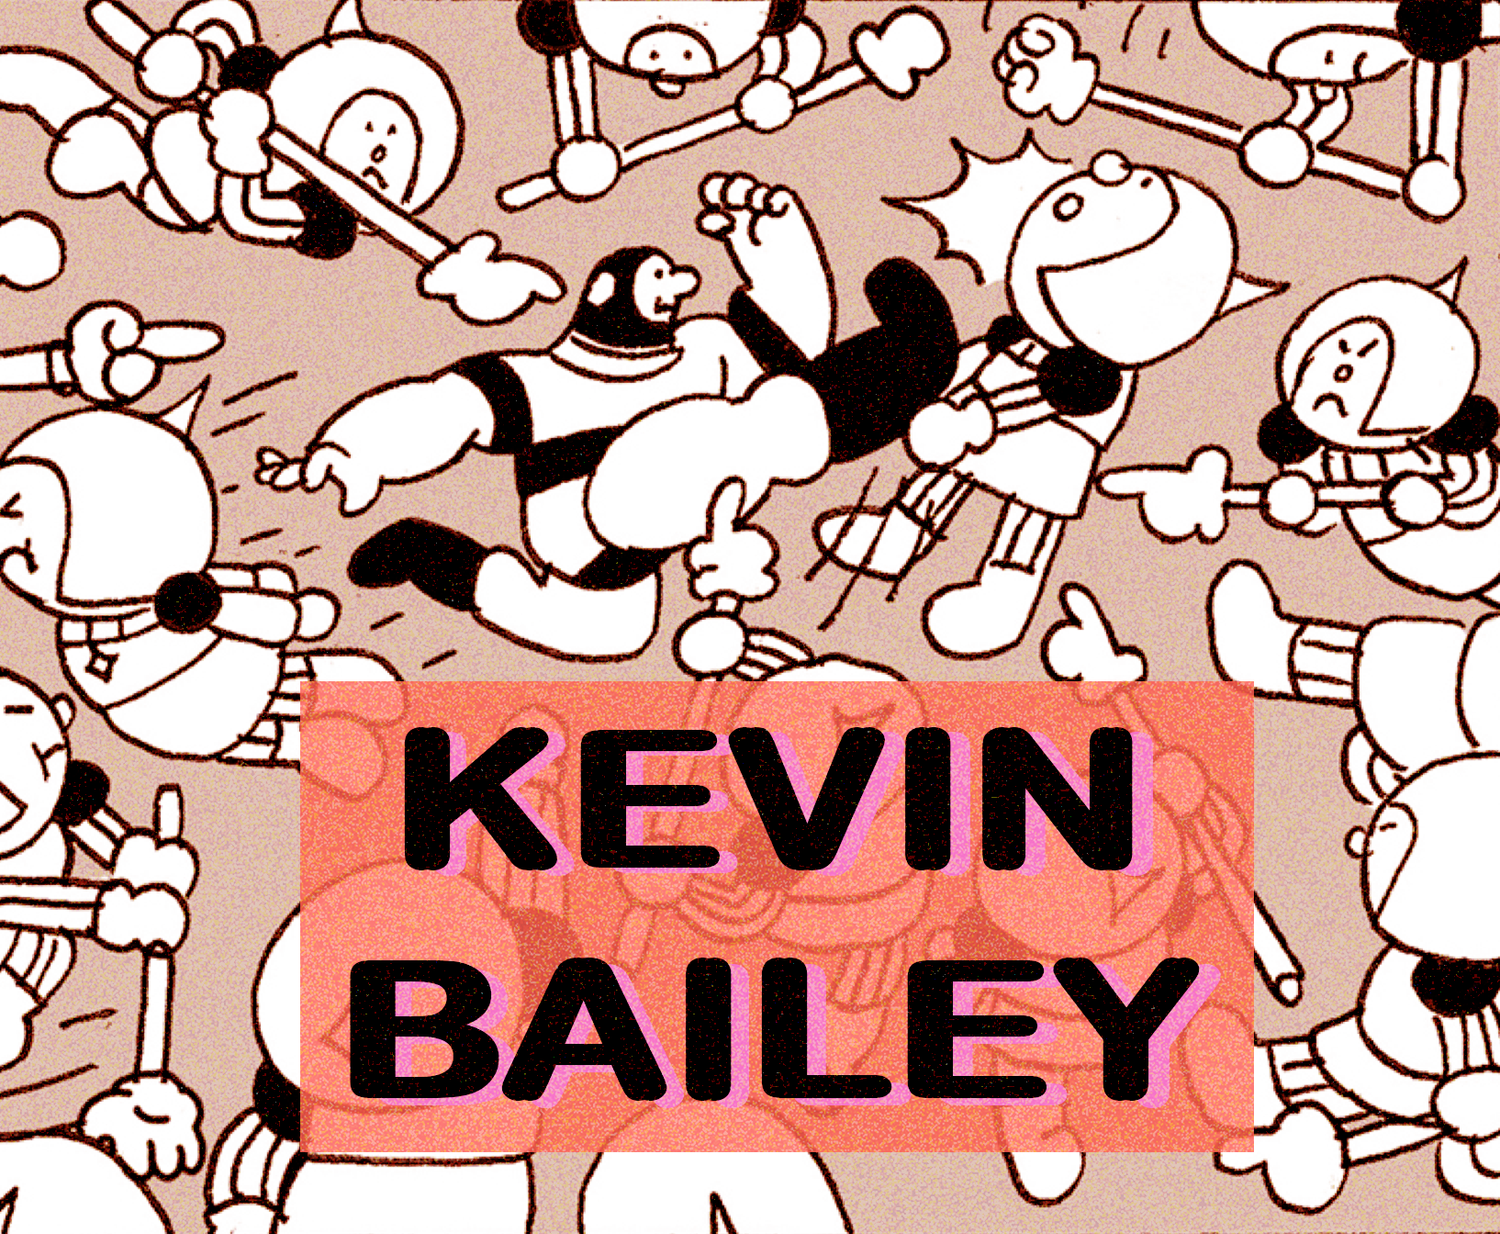 KEVIN BAILEY CARTOONS